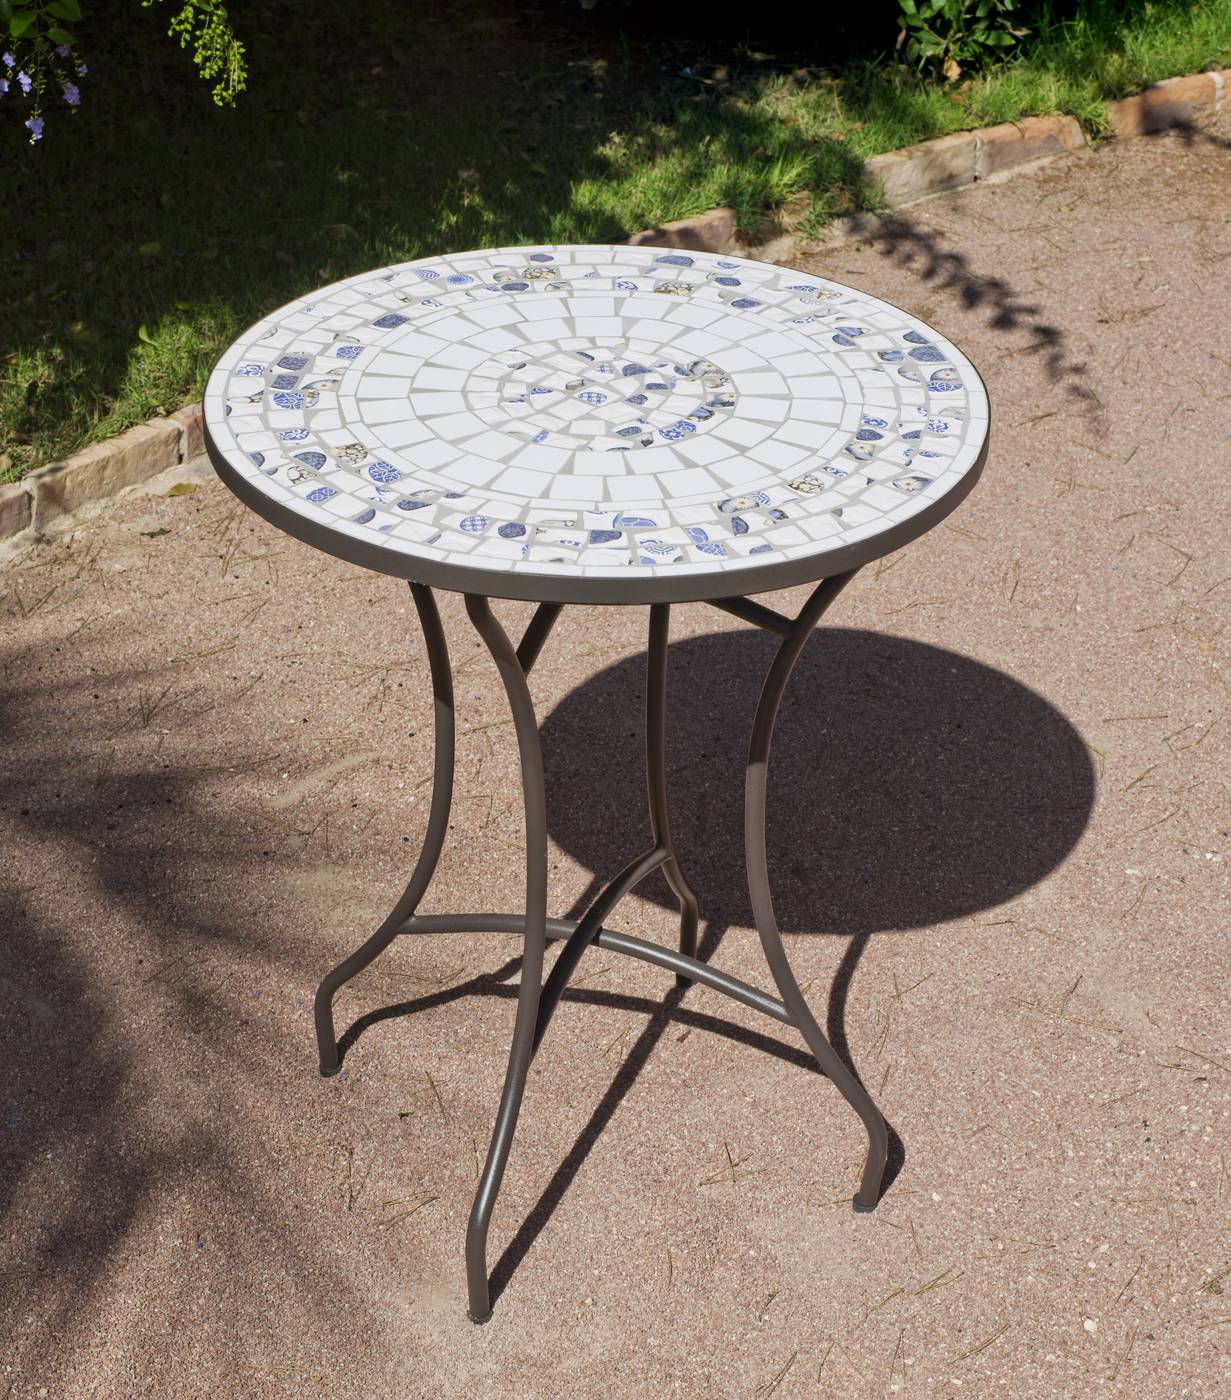 Mesa de forja para jardín o terraza, con tablero mosaico de 60 cm. de diámetro.